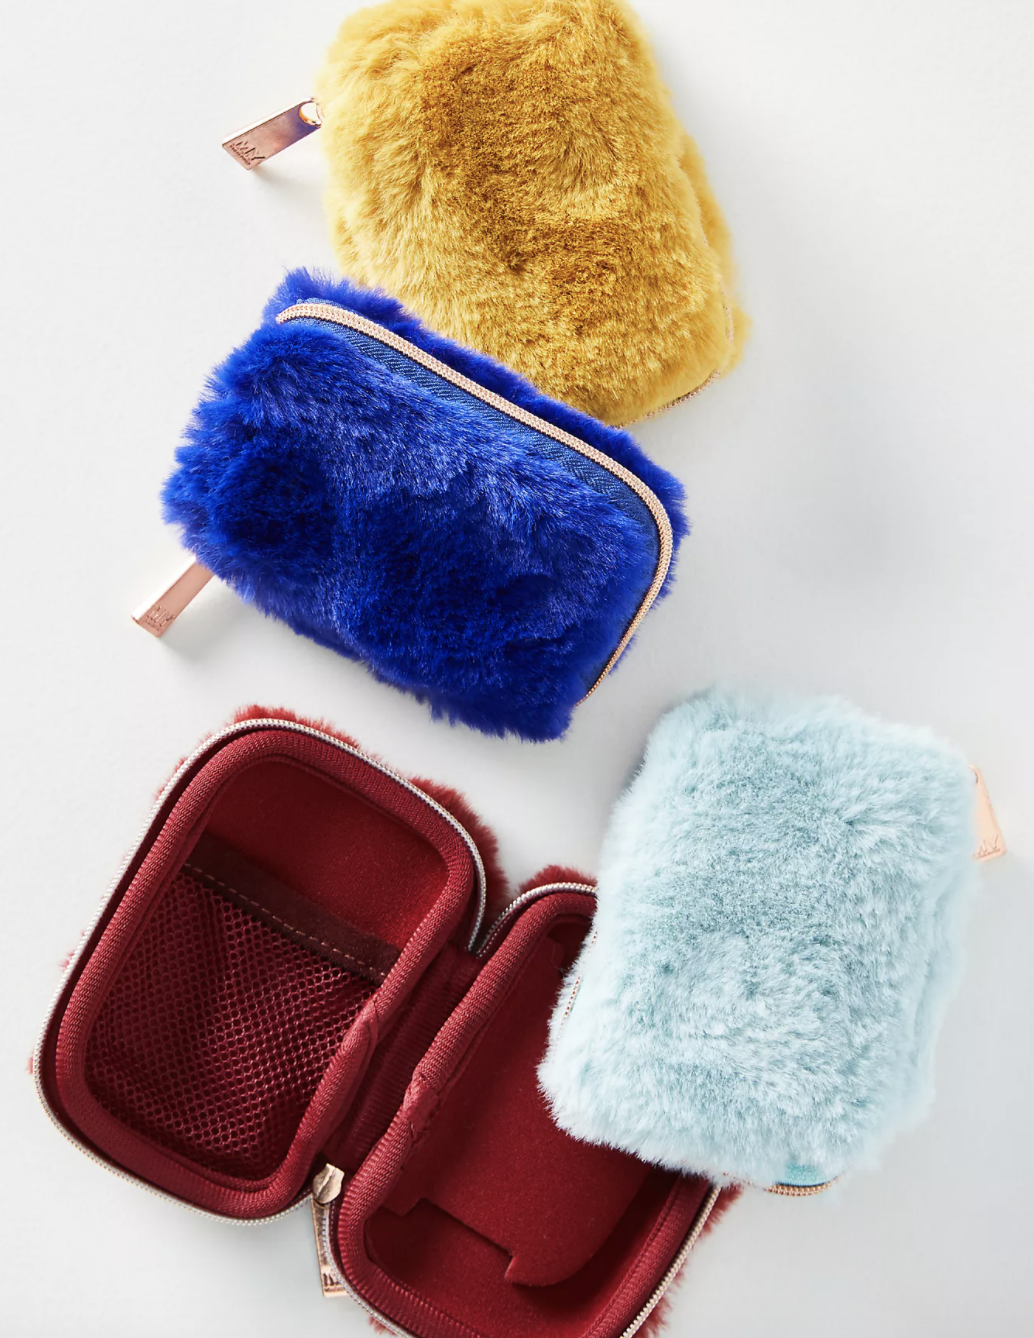 the four colors of the faux fur case